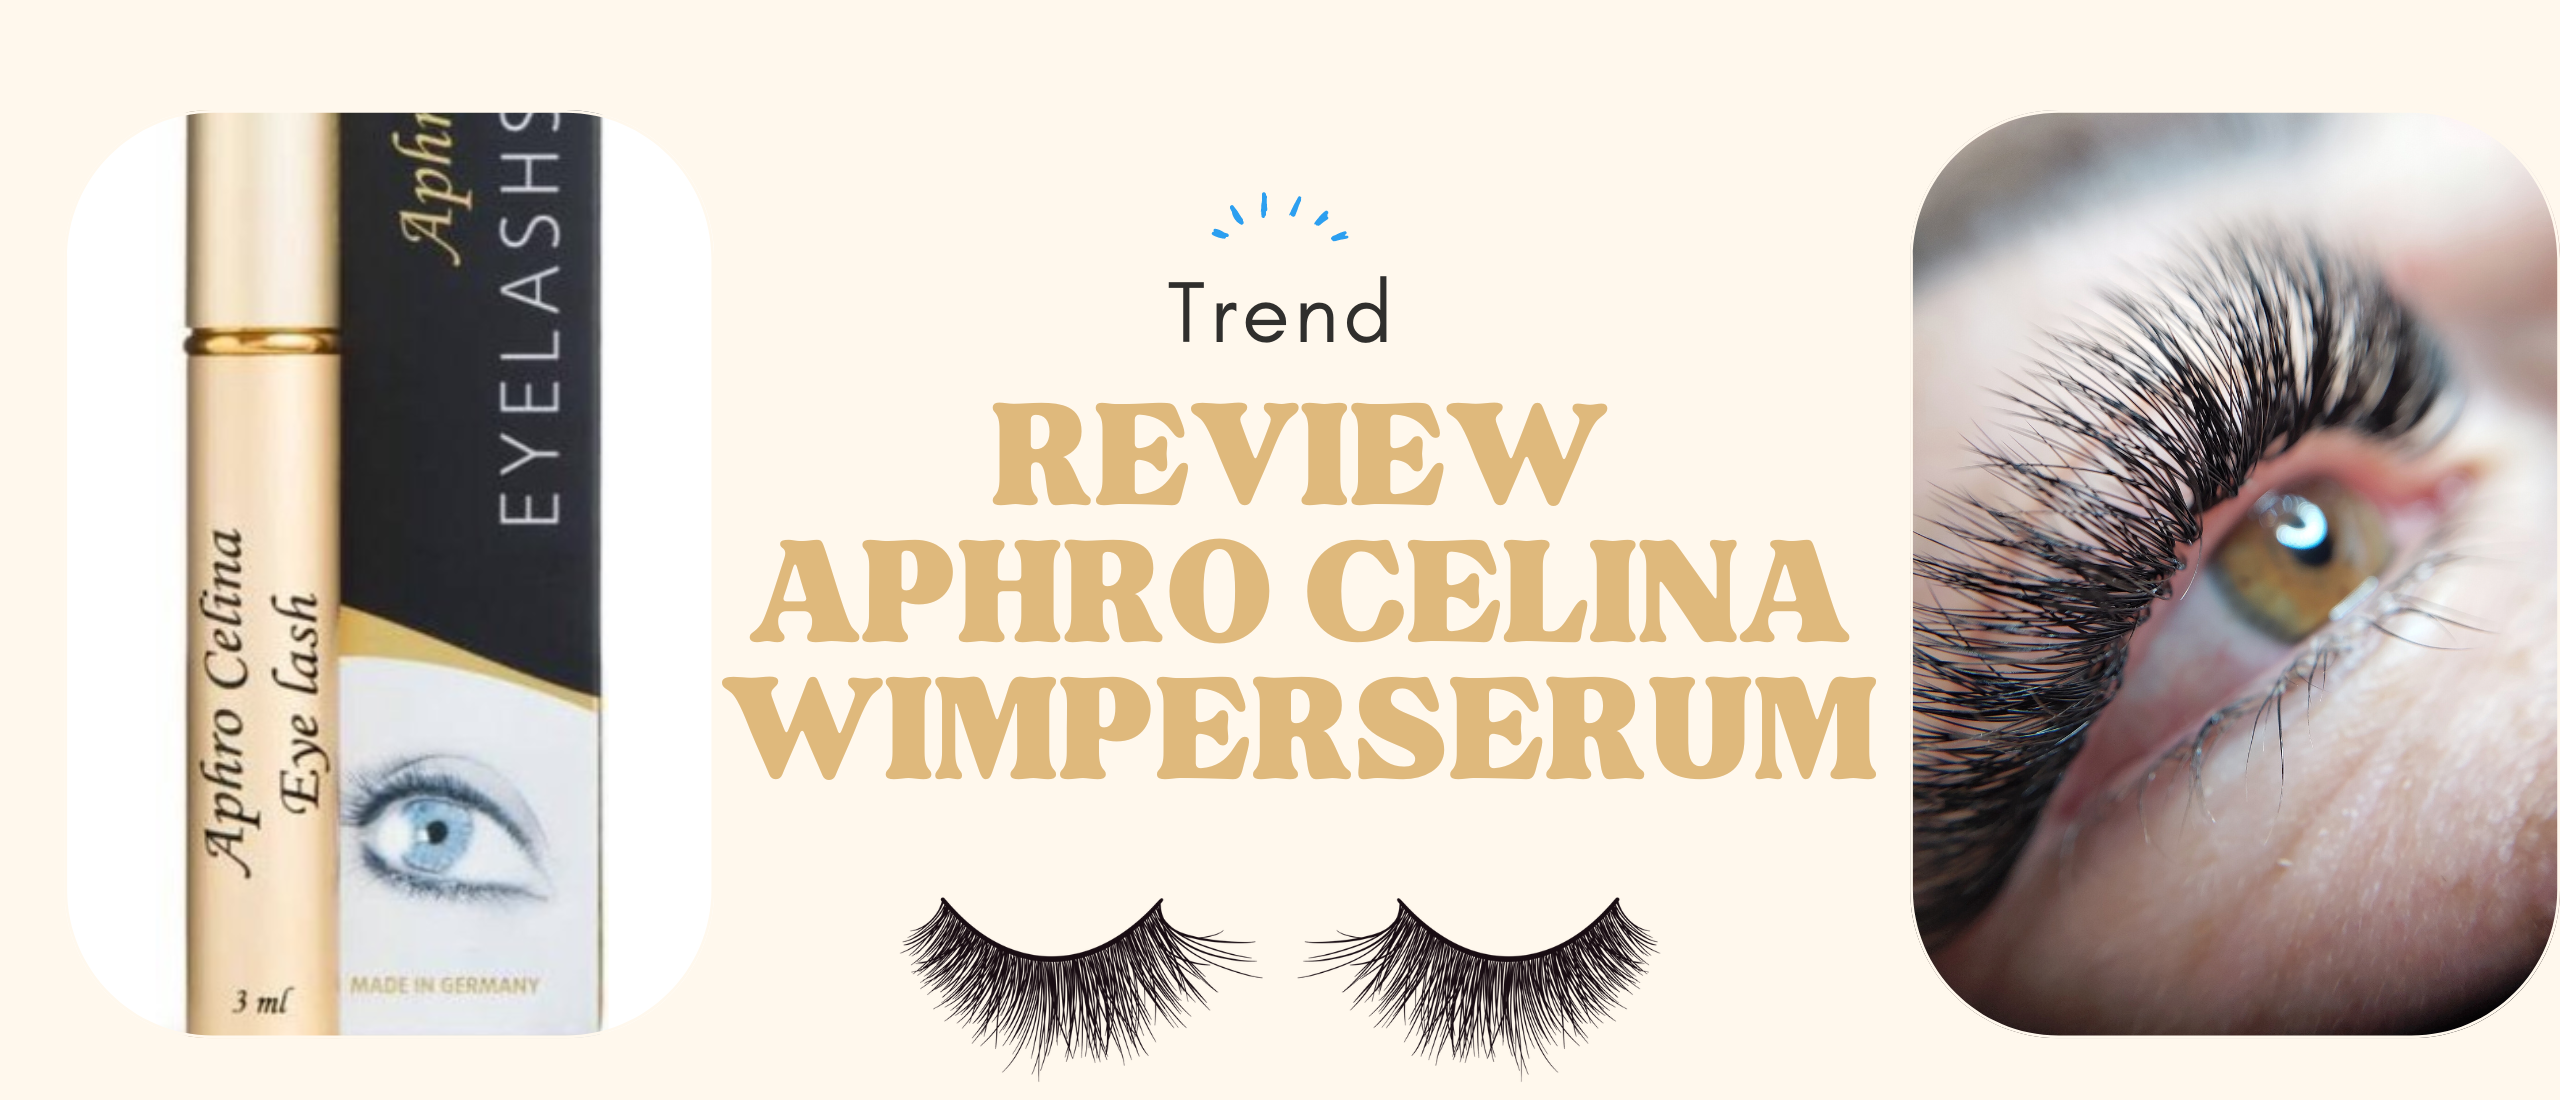 Review Aphro Celina Eyelash - Wimperserum - 3 ml